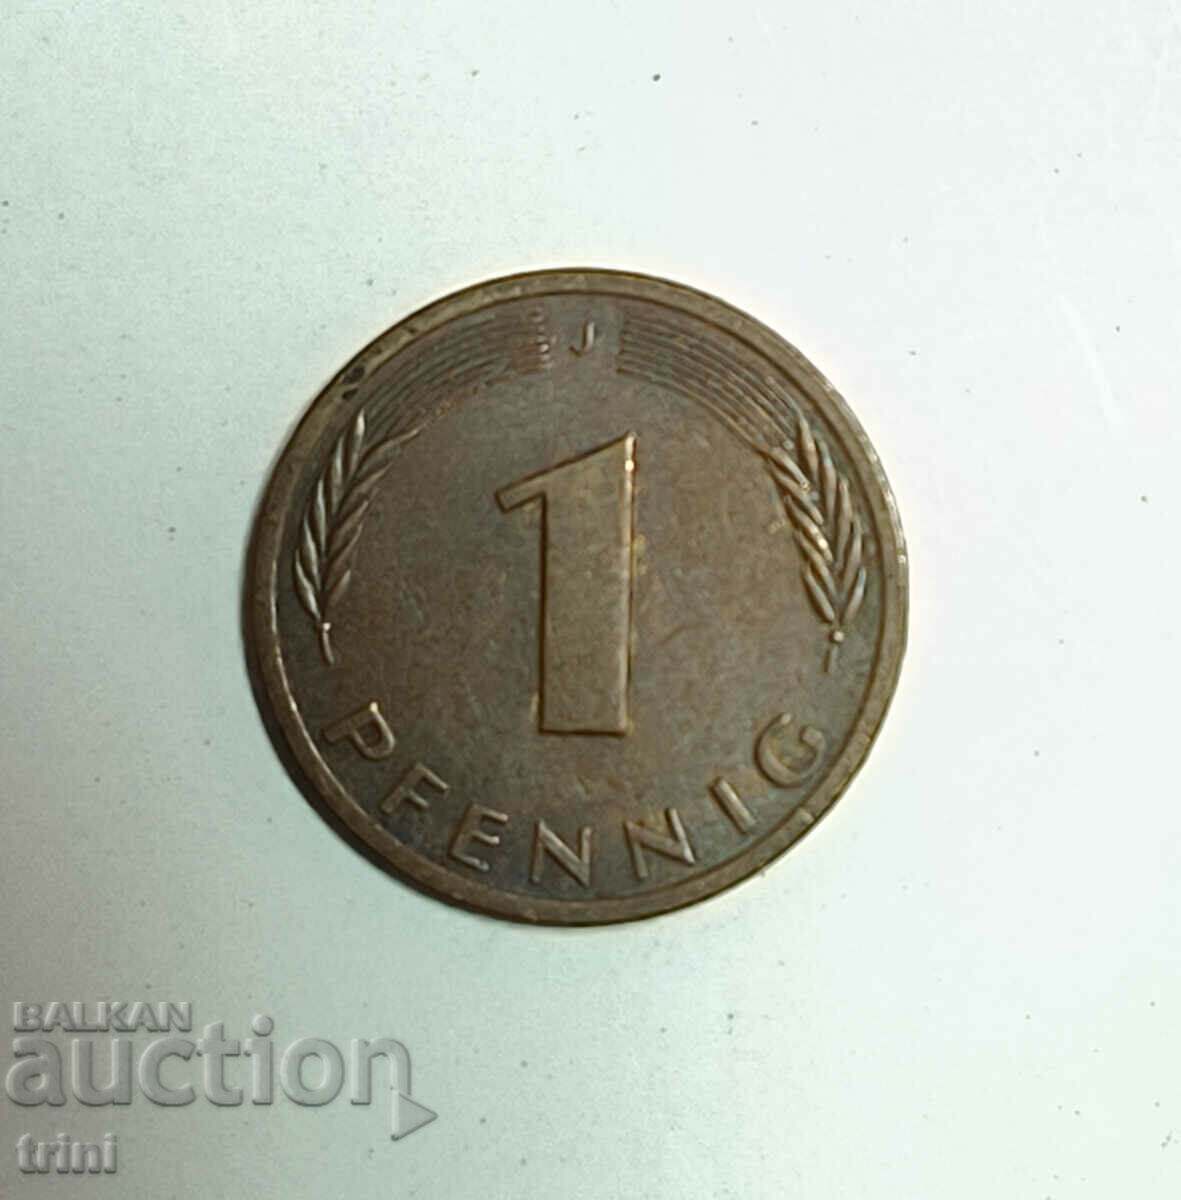 Germany 1 pfennig 1991 'J' - Hamburg e180